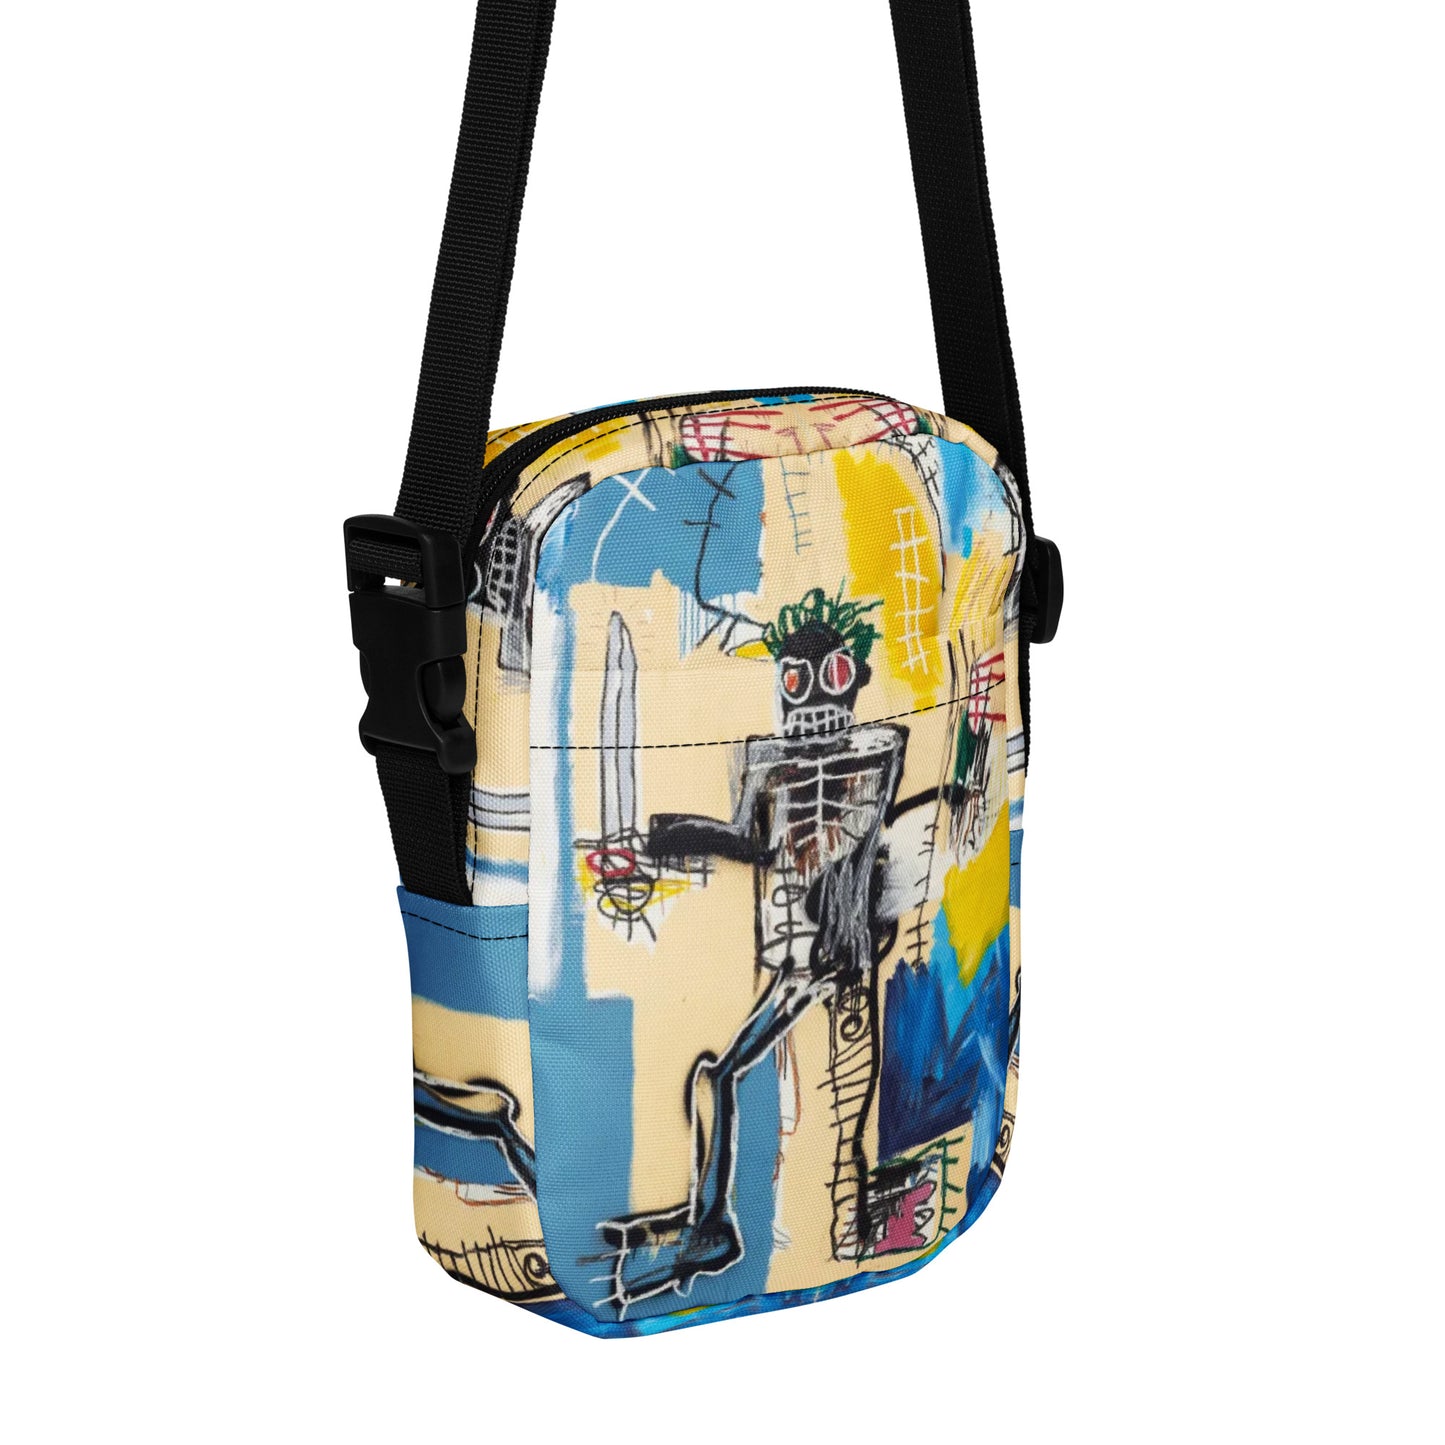 Jean-Michel Basquiat "Warrior" Artwork Bag